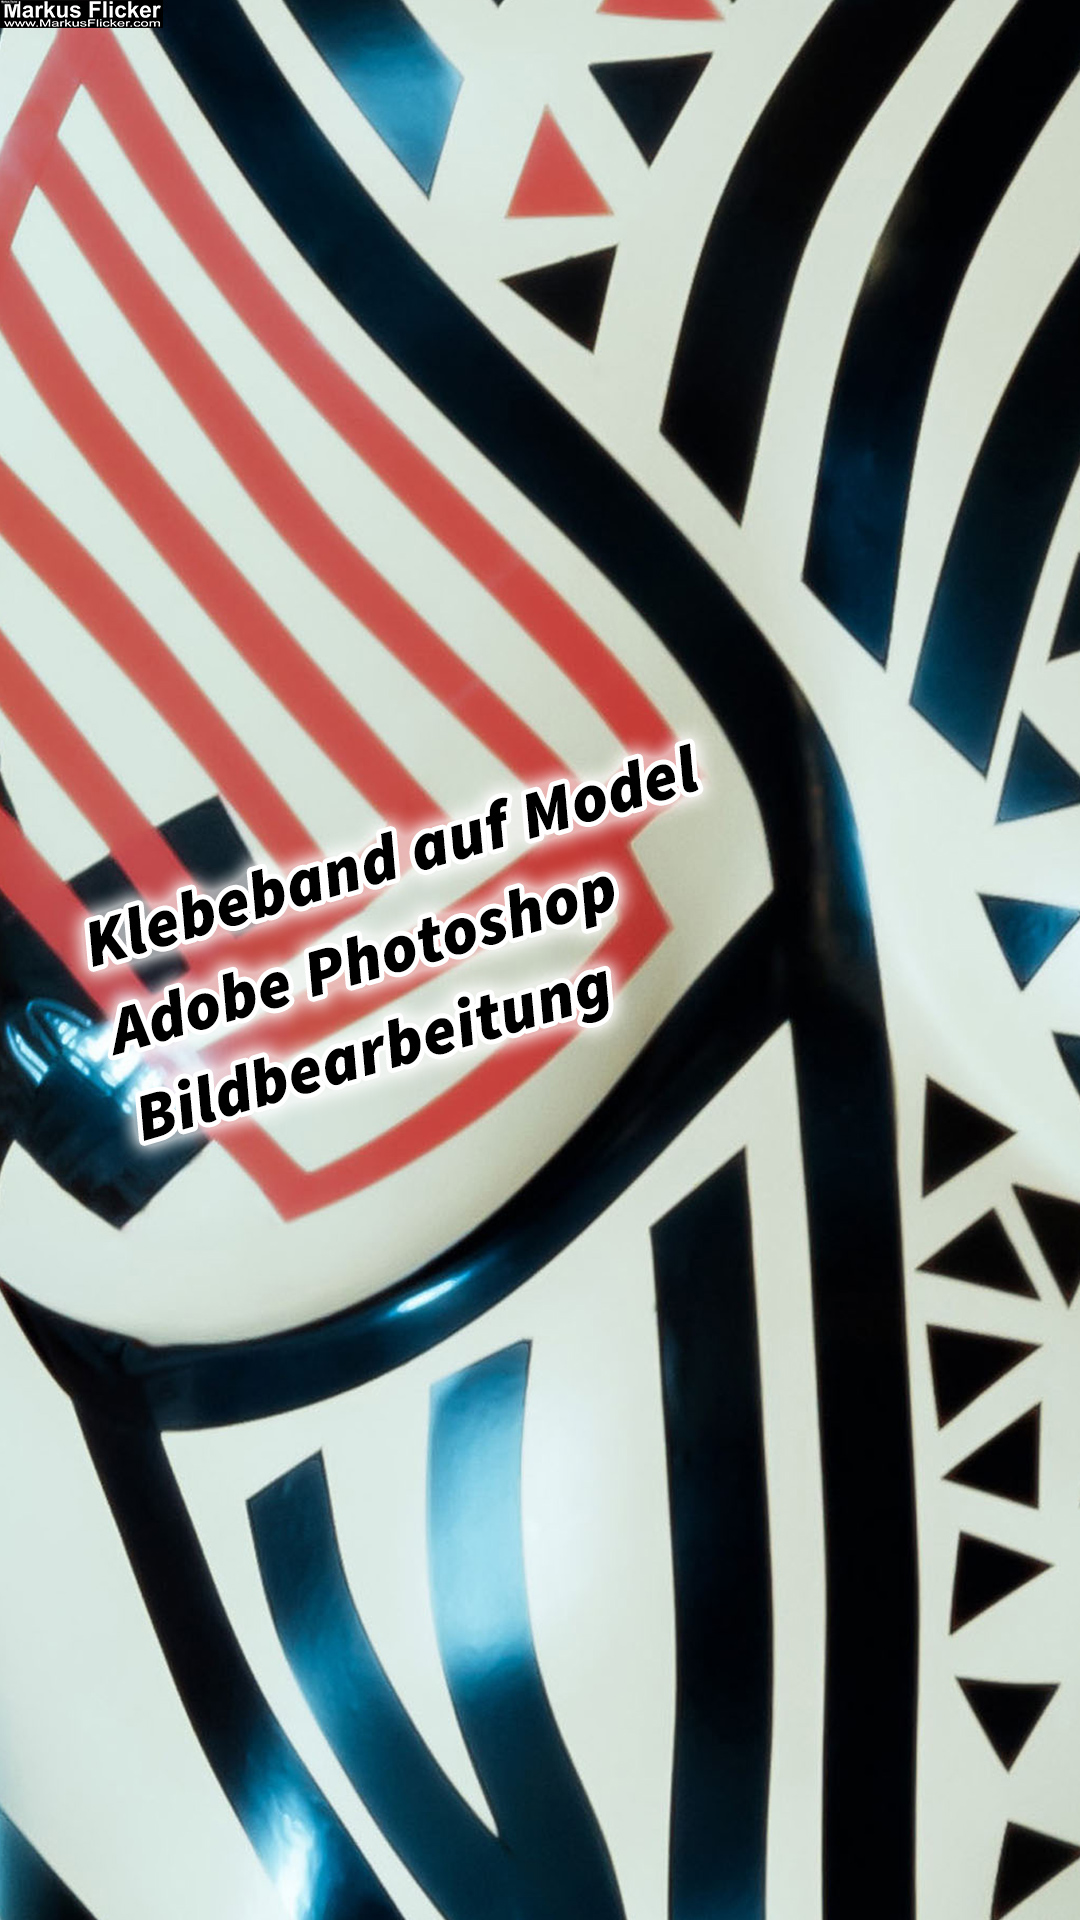 Klebeband auf Model Adobe Photoshop Bildbearbeitung #TapeTheModelPhotography